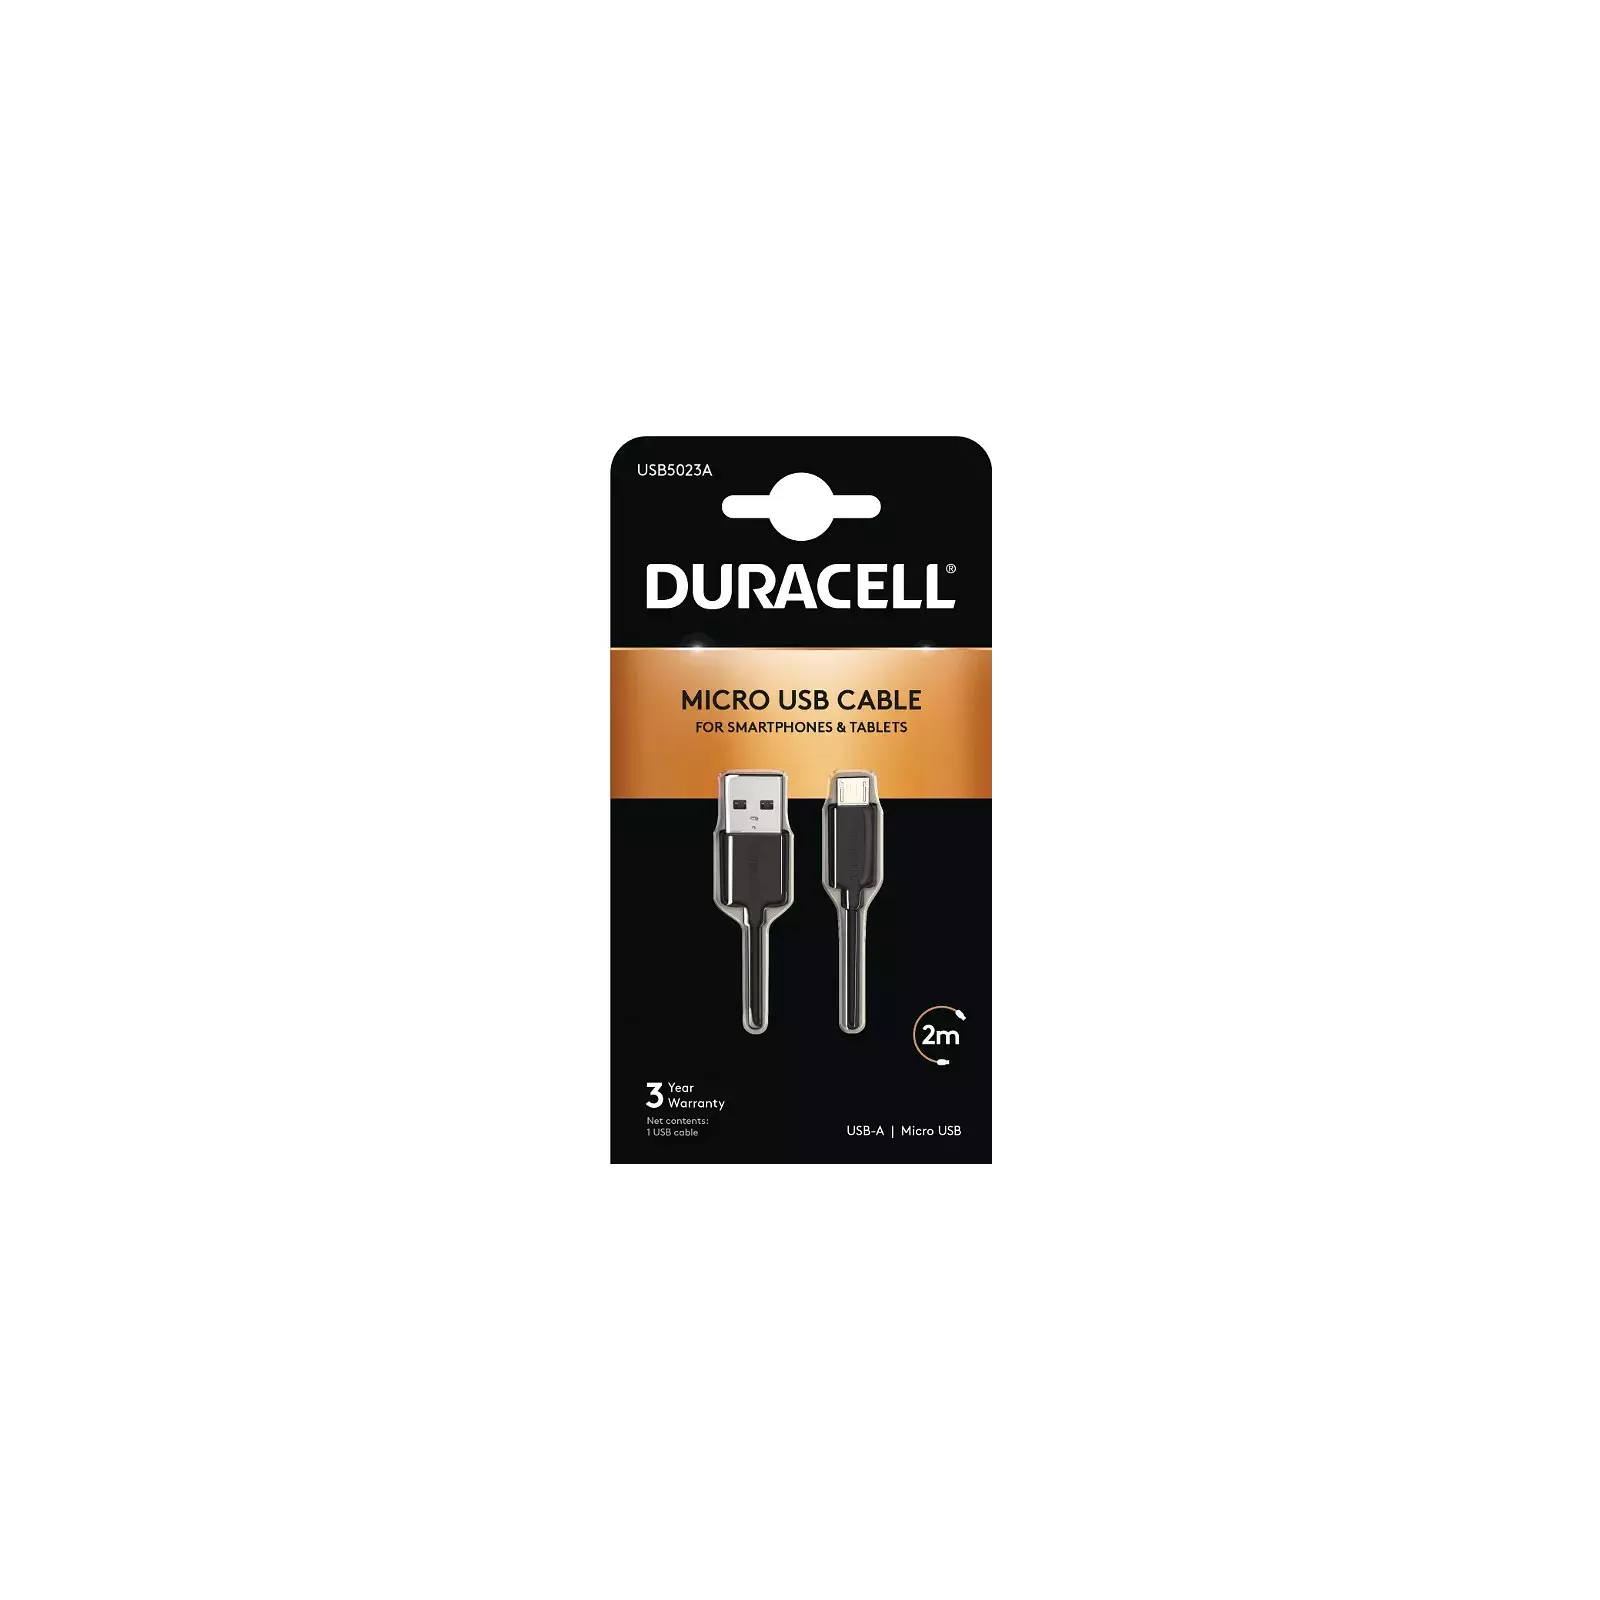 Duracell USB5023A Photo 1